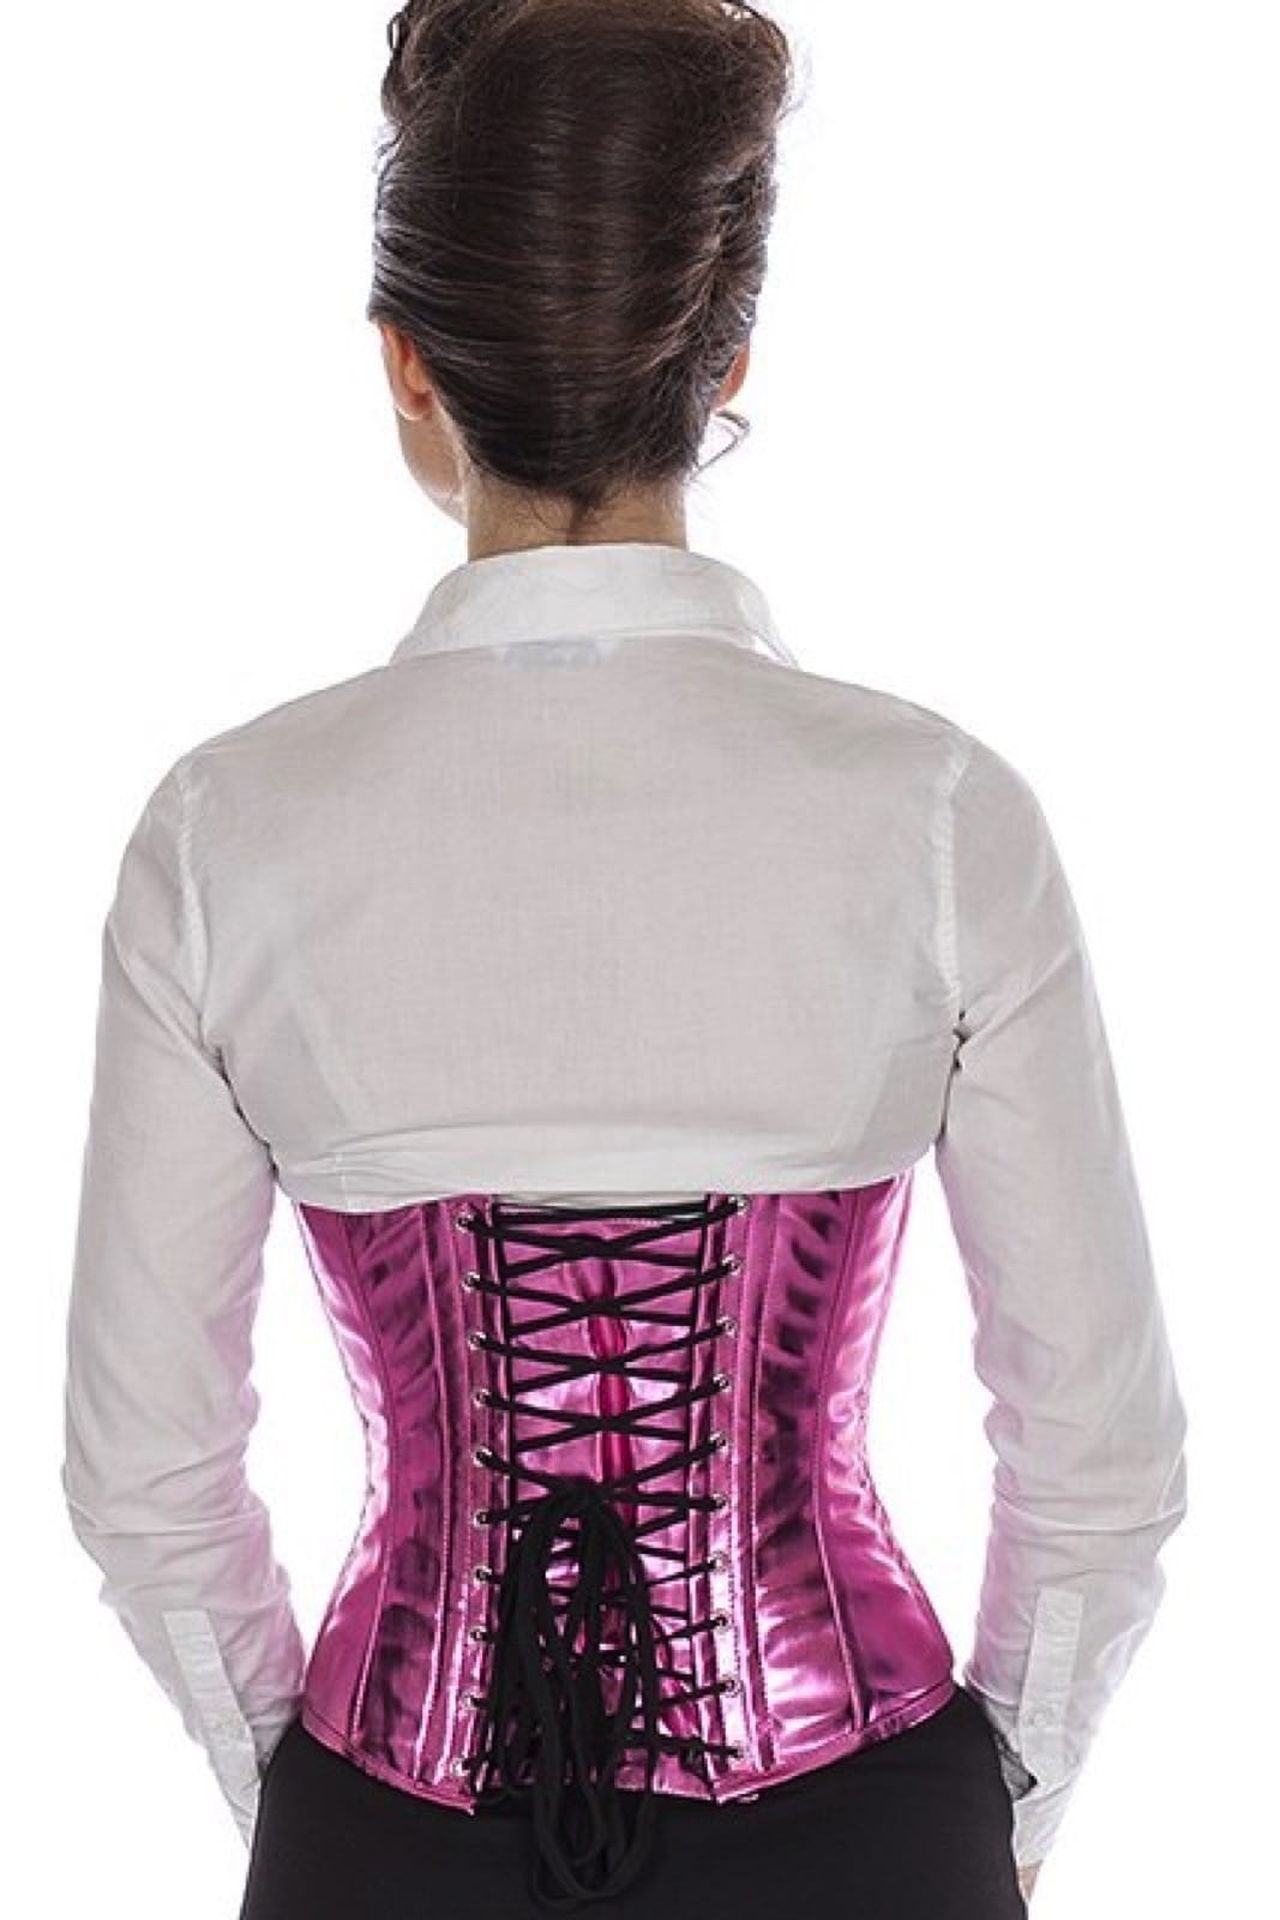 Lak corset roze glitter taille Korset pwG7